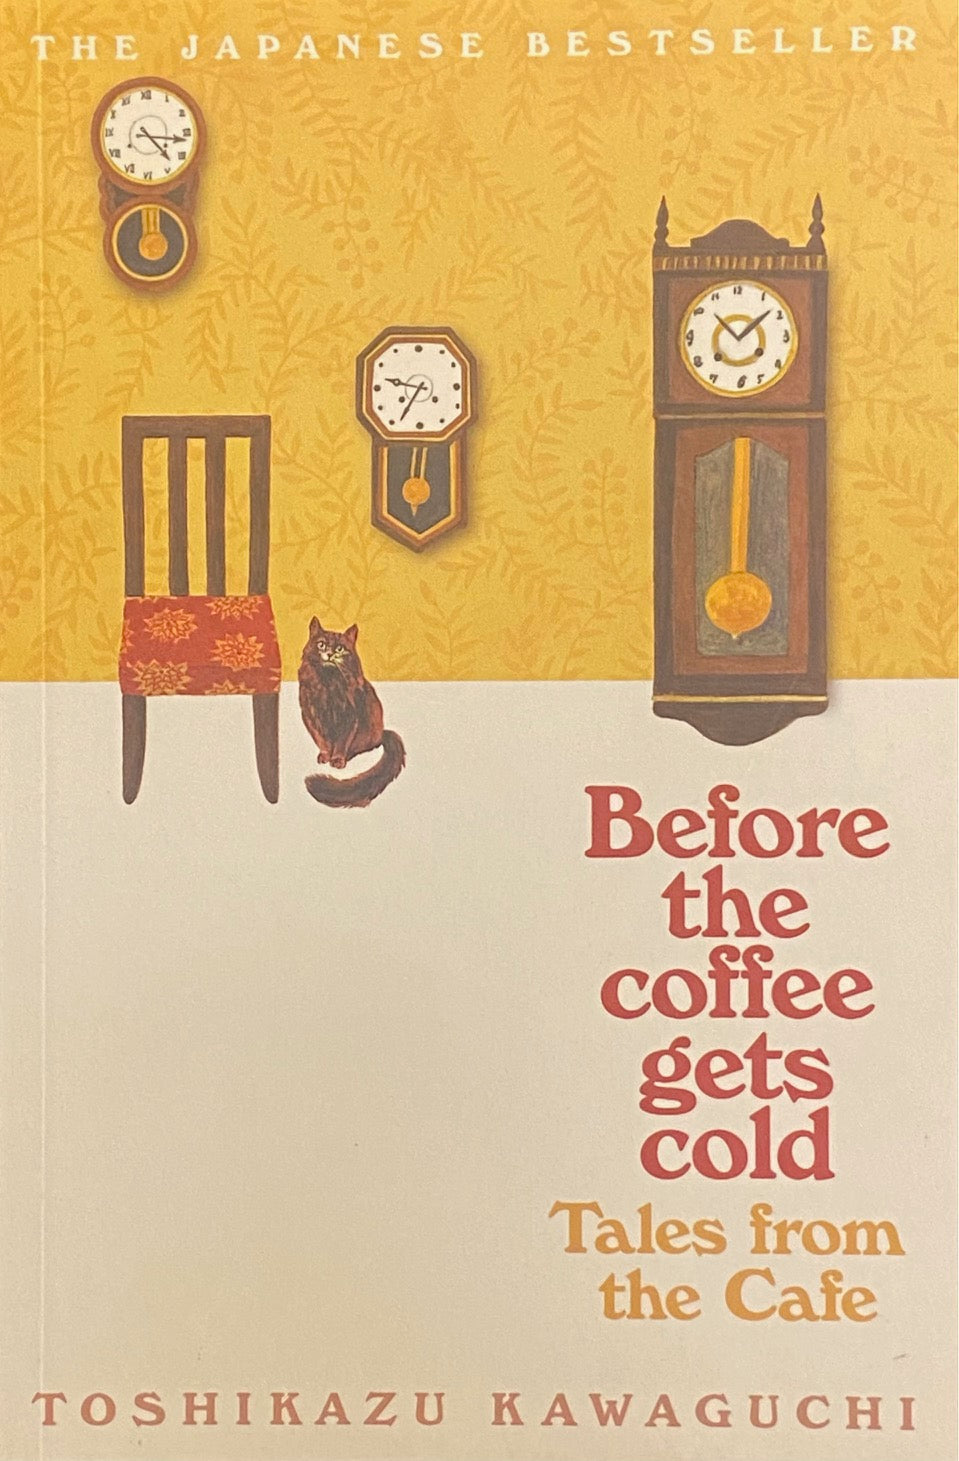 Tales from the Café by Toshikazu Kawaguchi